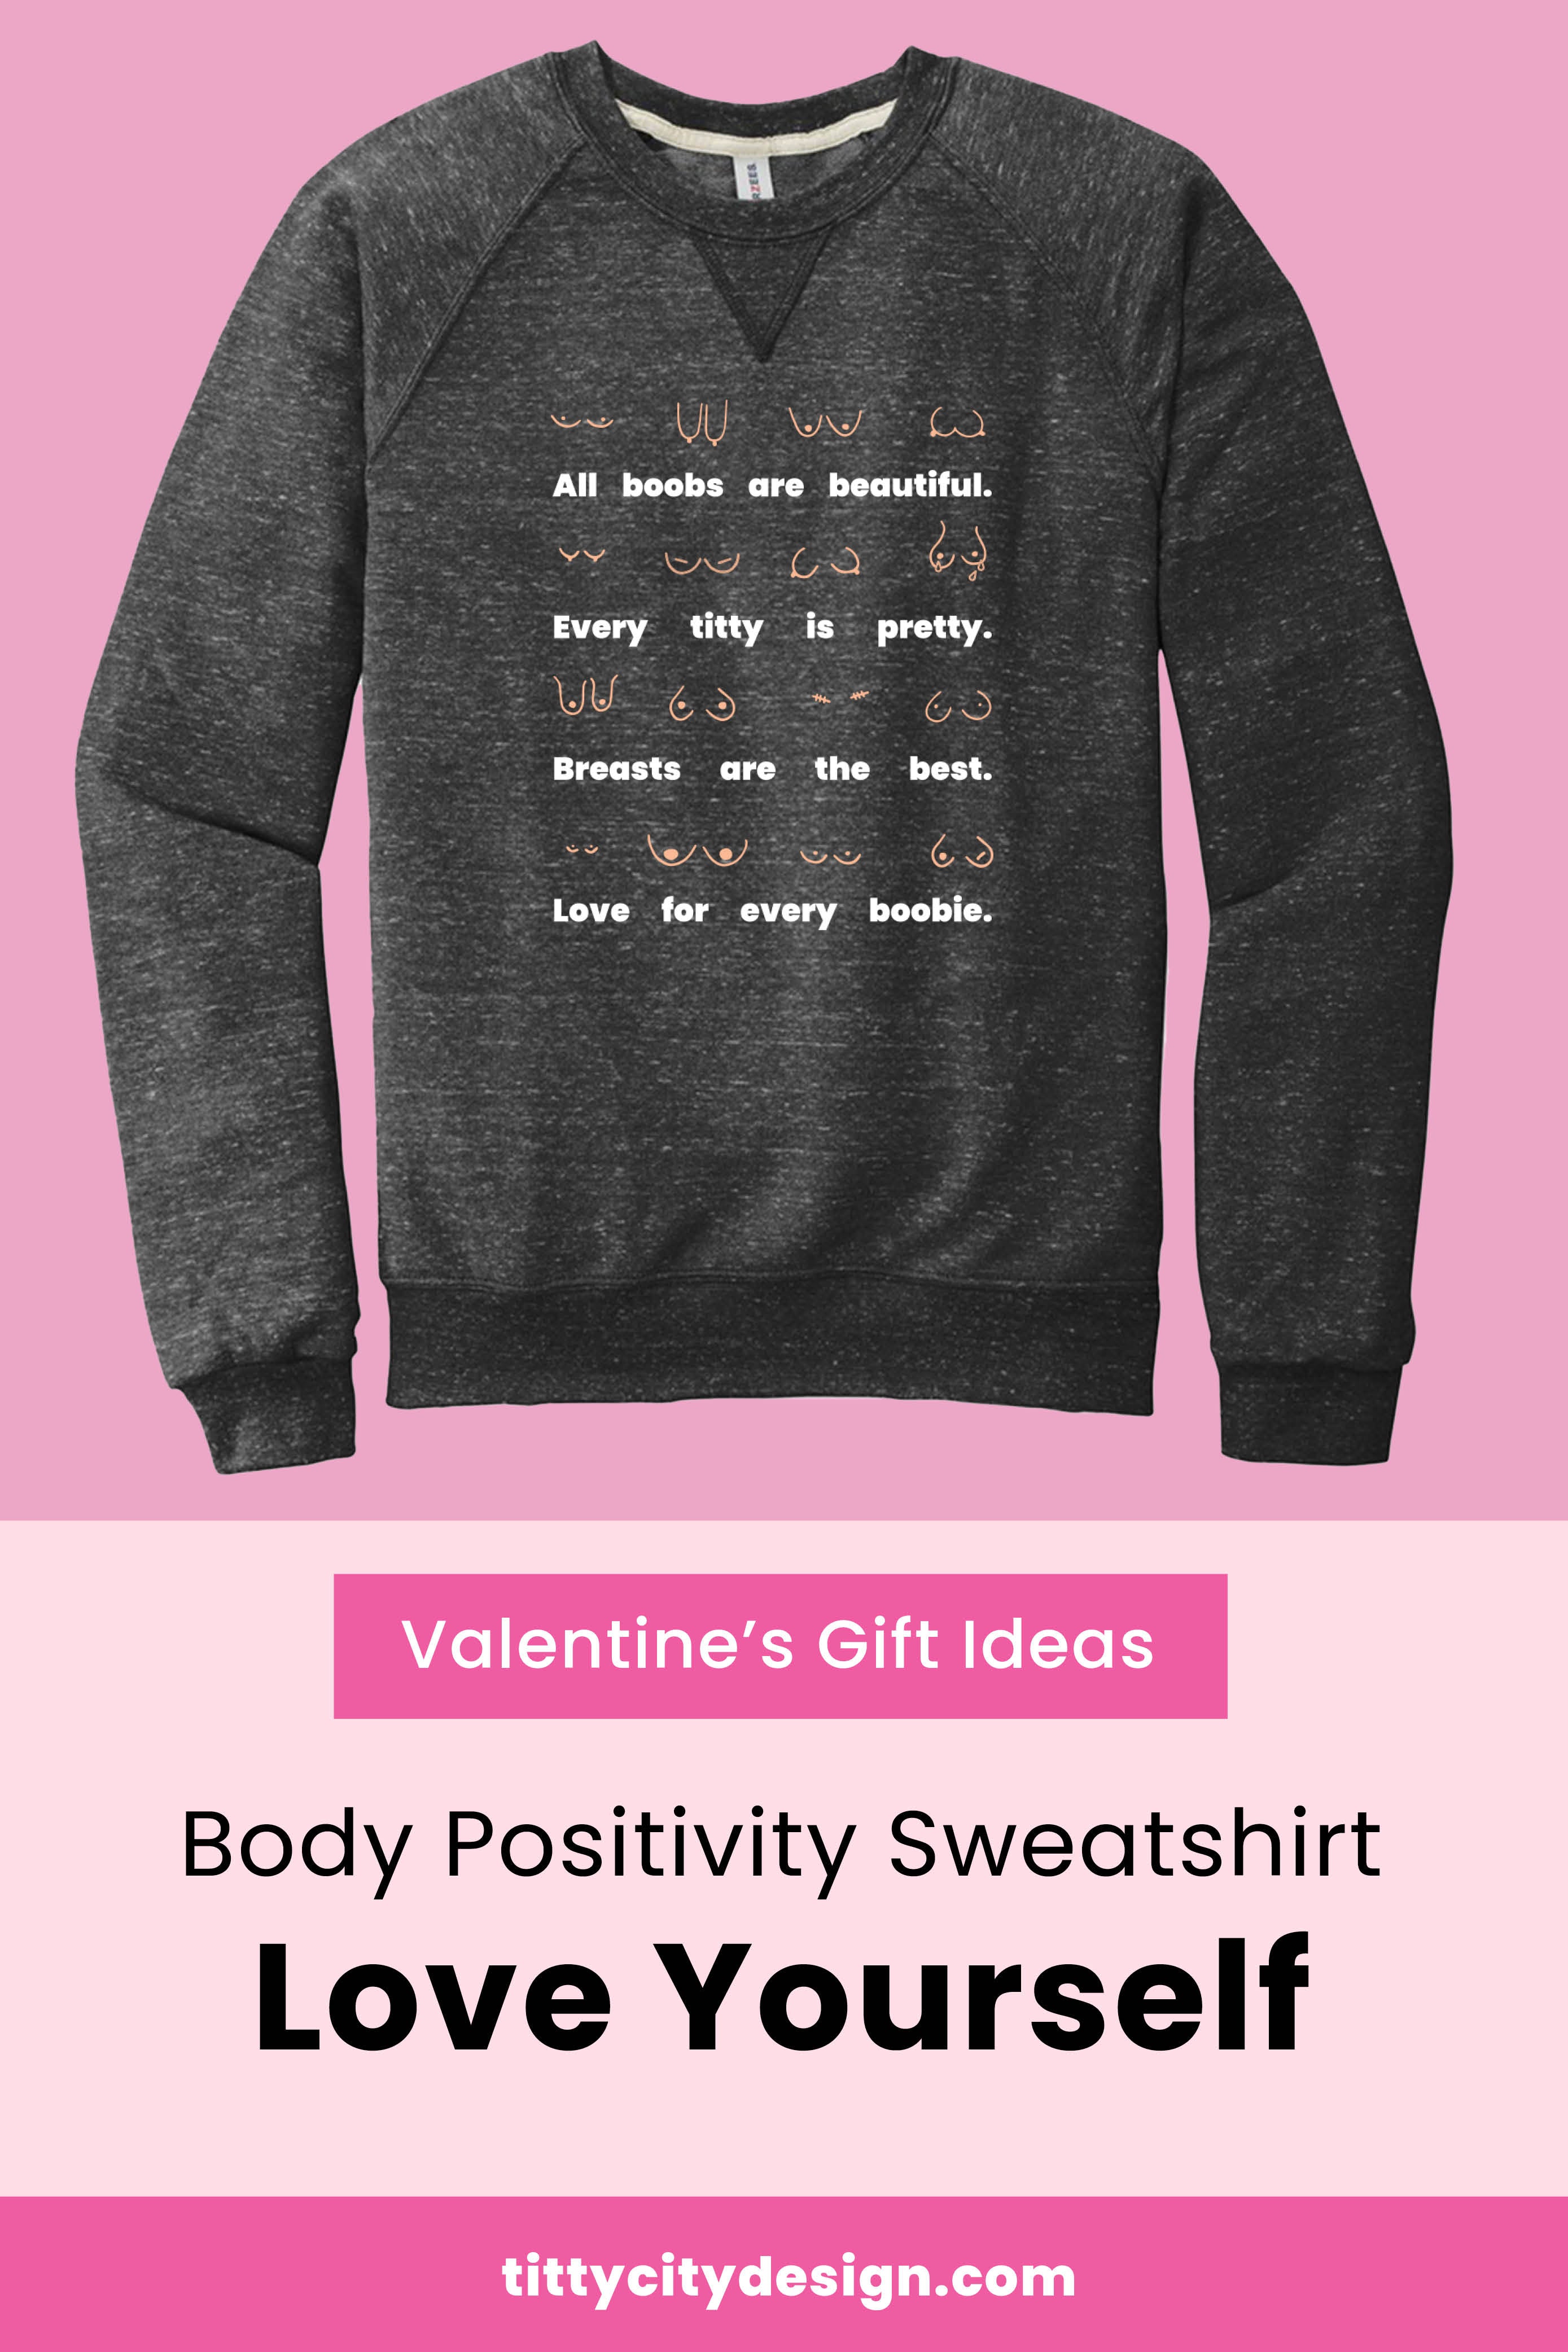 Valentines Gift Ideas - Self-love Empowering Sweatshirt "Love Yourself"